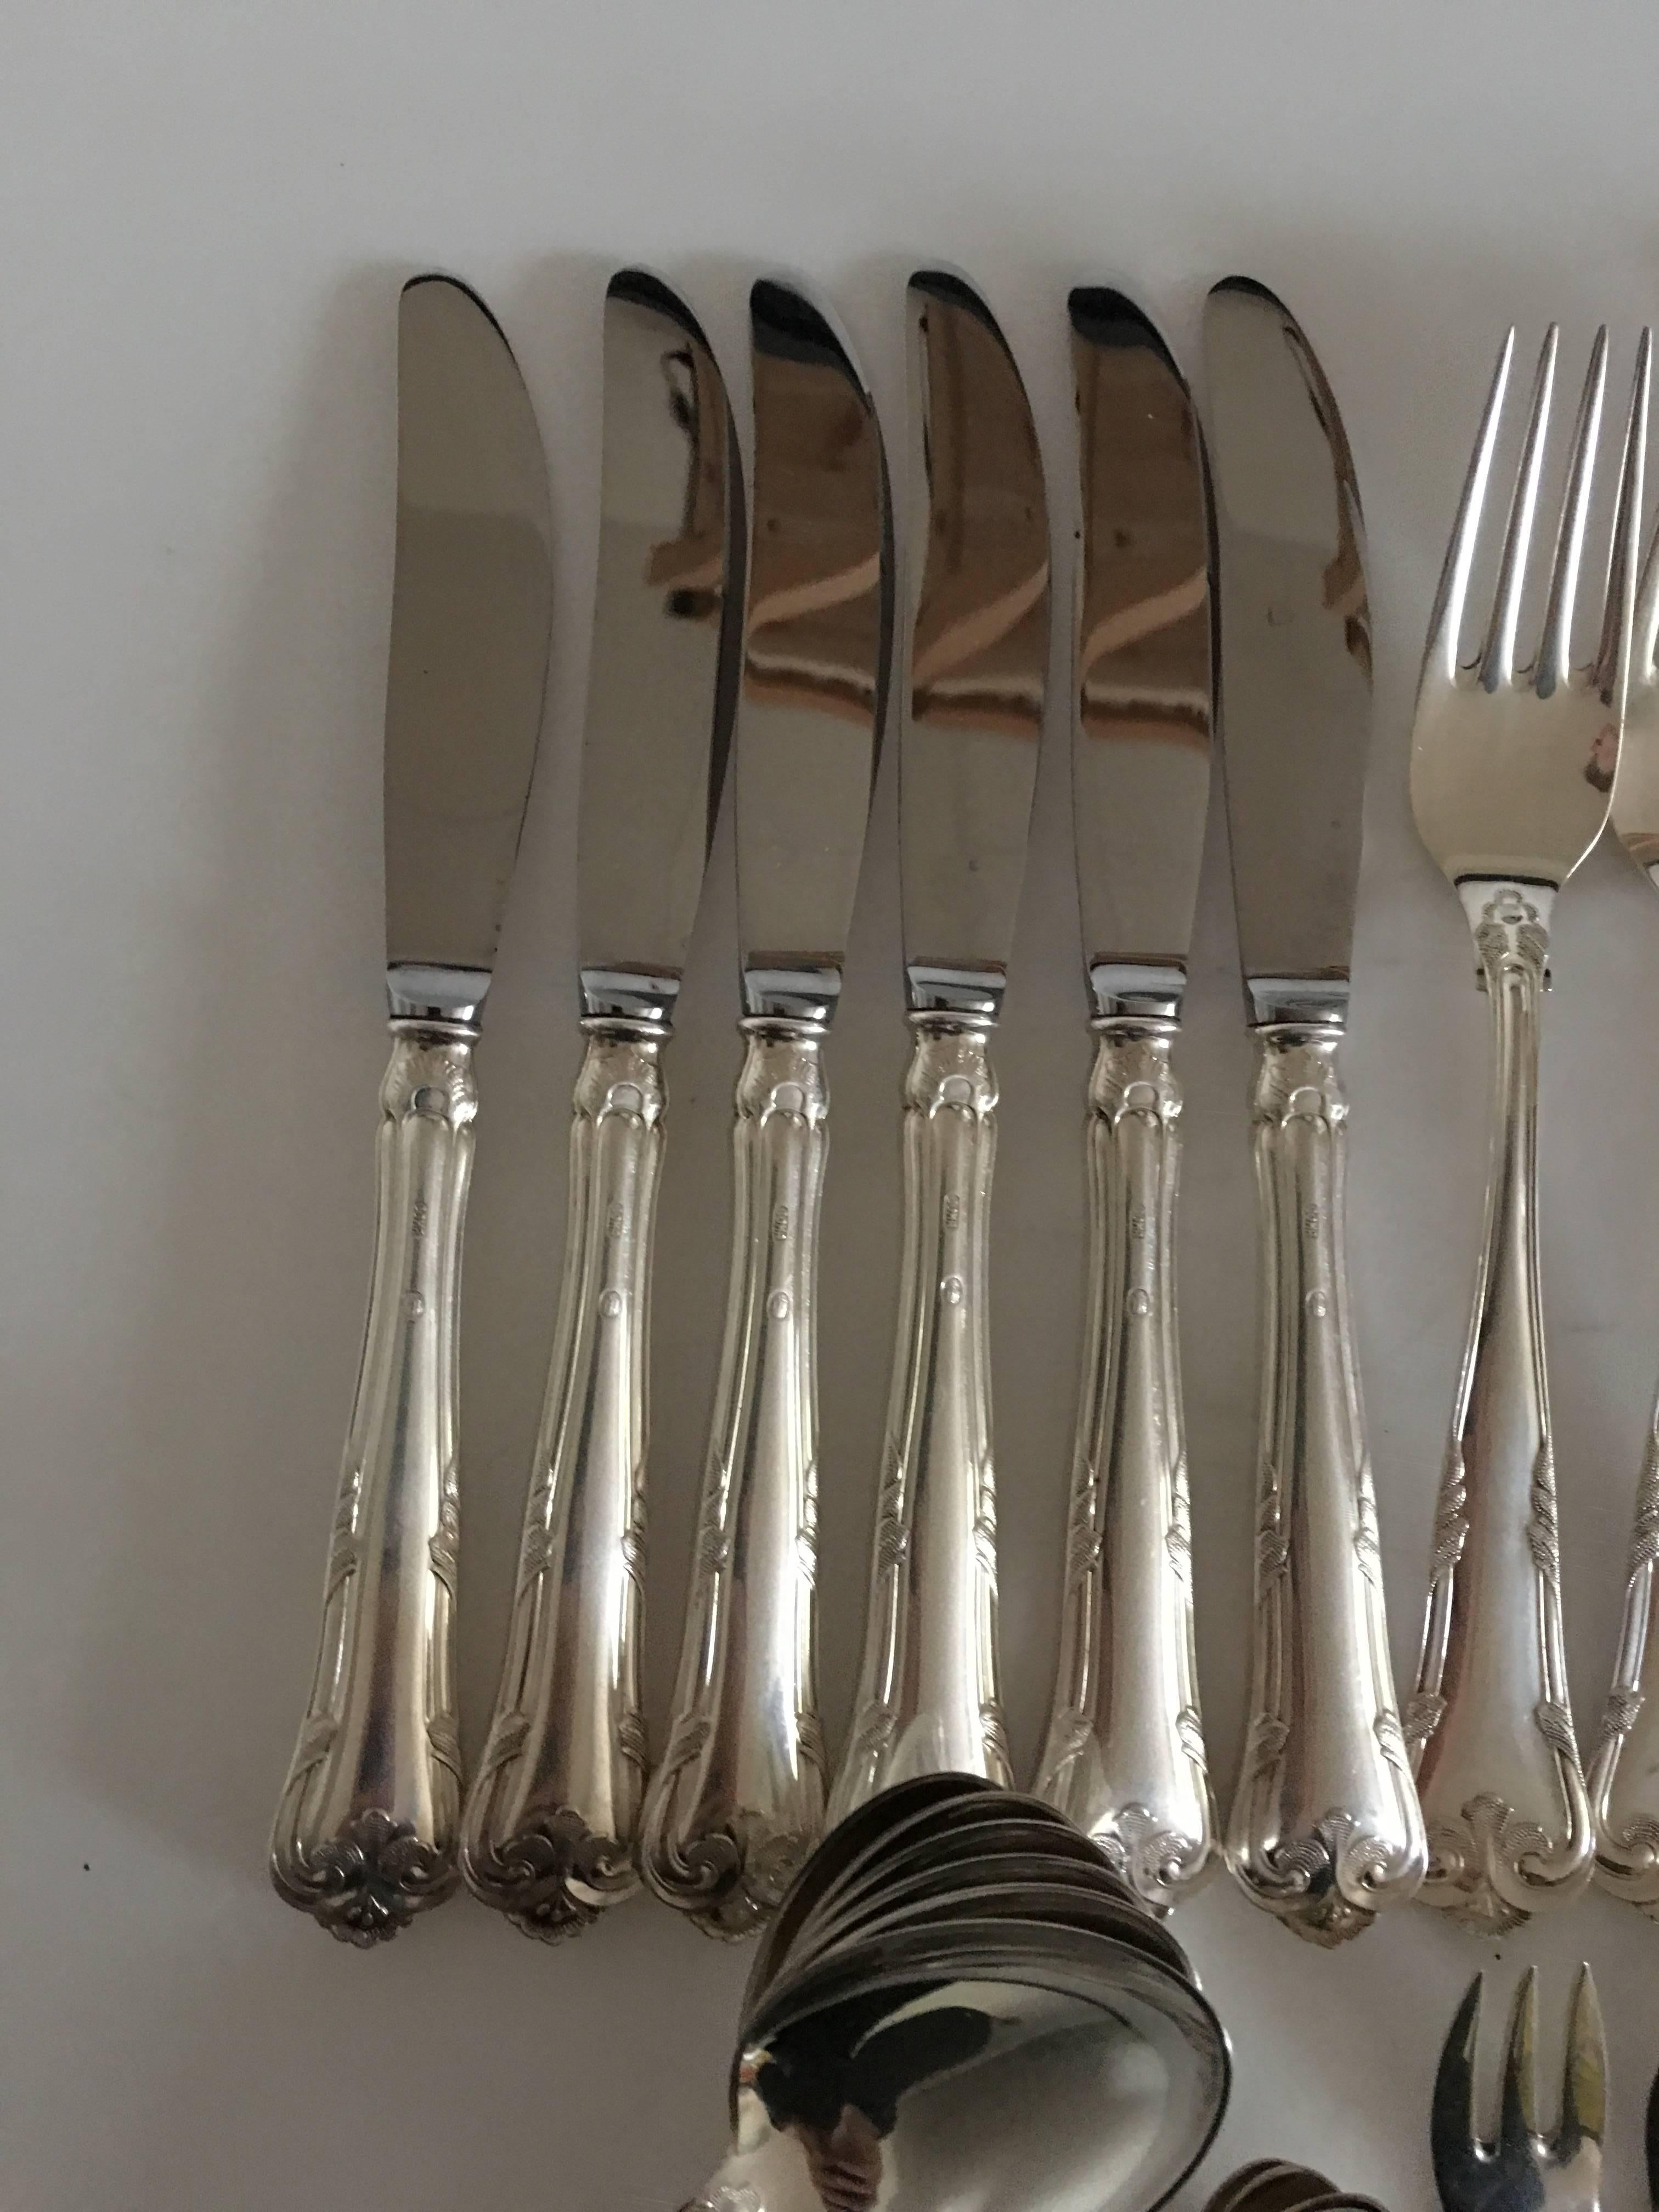 Herregaard Cohr silver flatware set for six people. 30 pieces.

The set consists of: 

Six knives 20.5 cm L (8 5/64